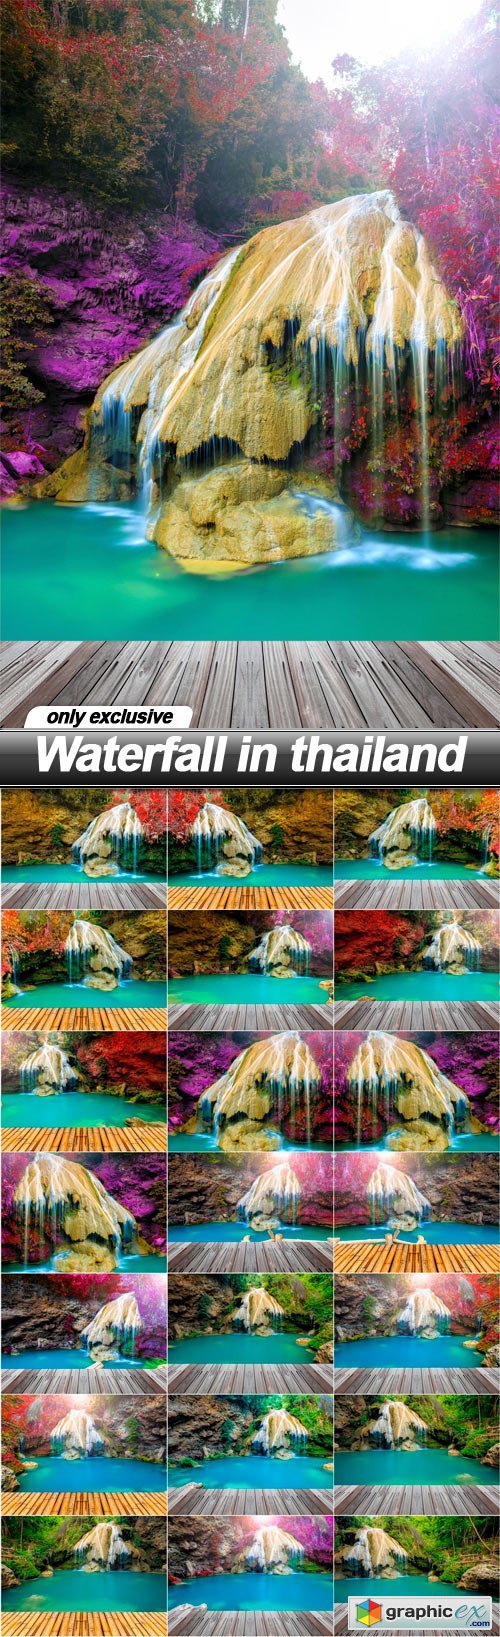 Waterfall in thailand - 21 UHQ JPEG